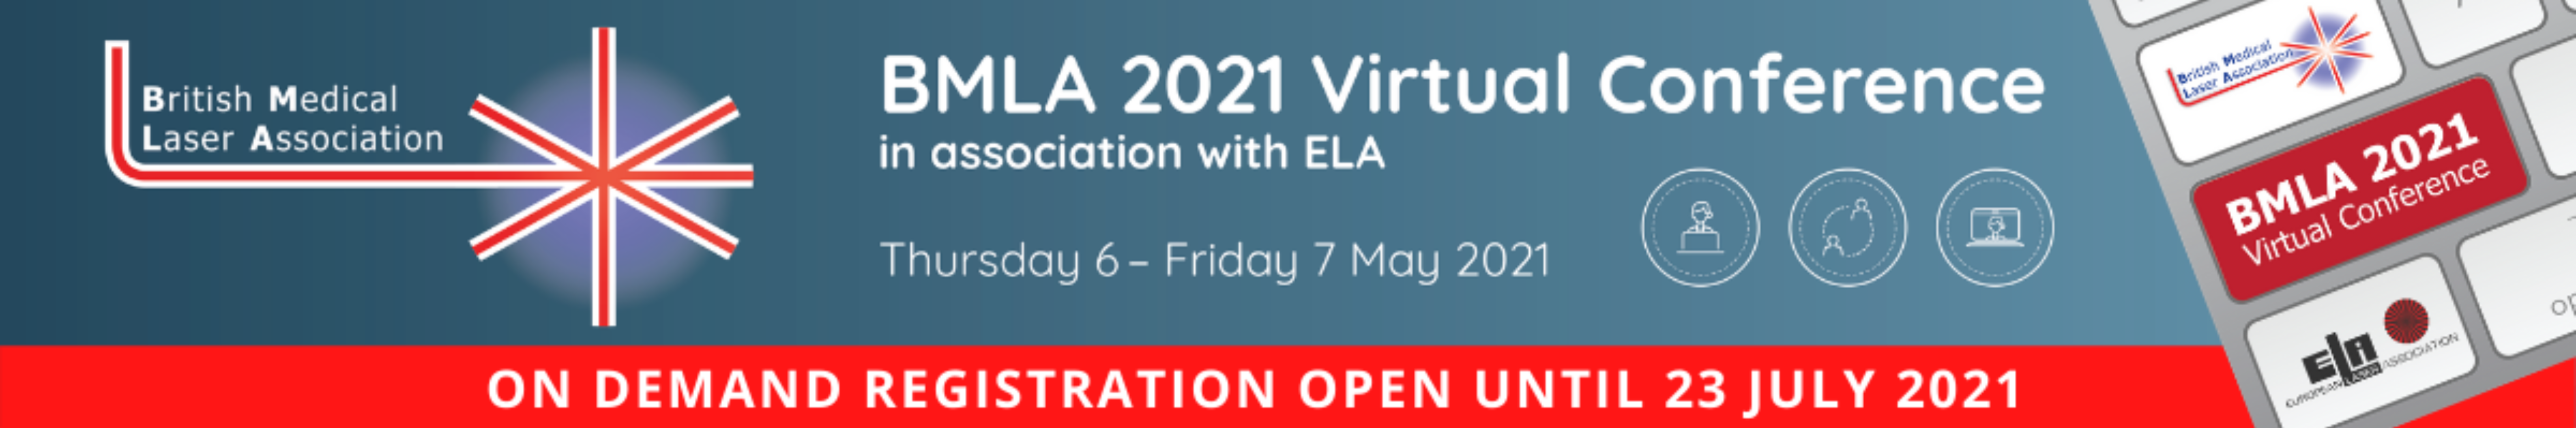 BMLA 2021 Virtual Conference & Courses